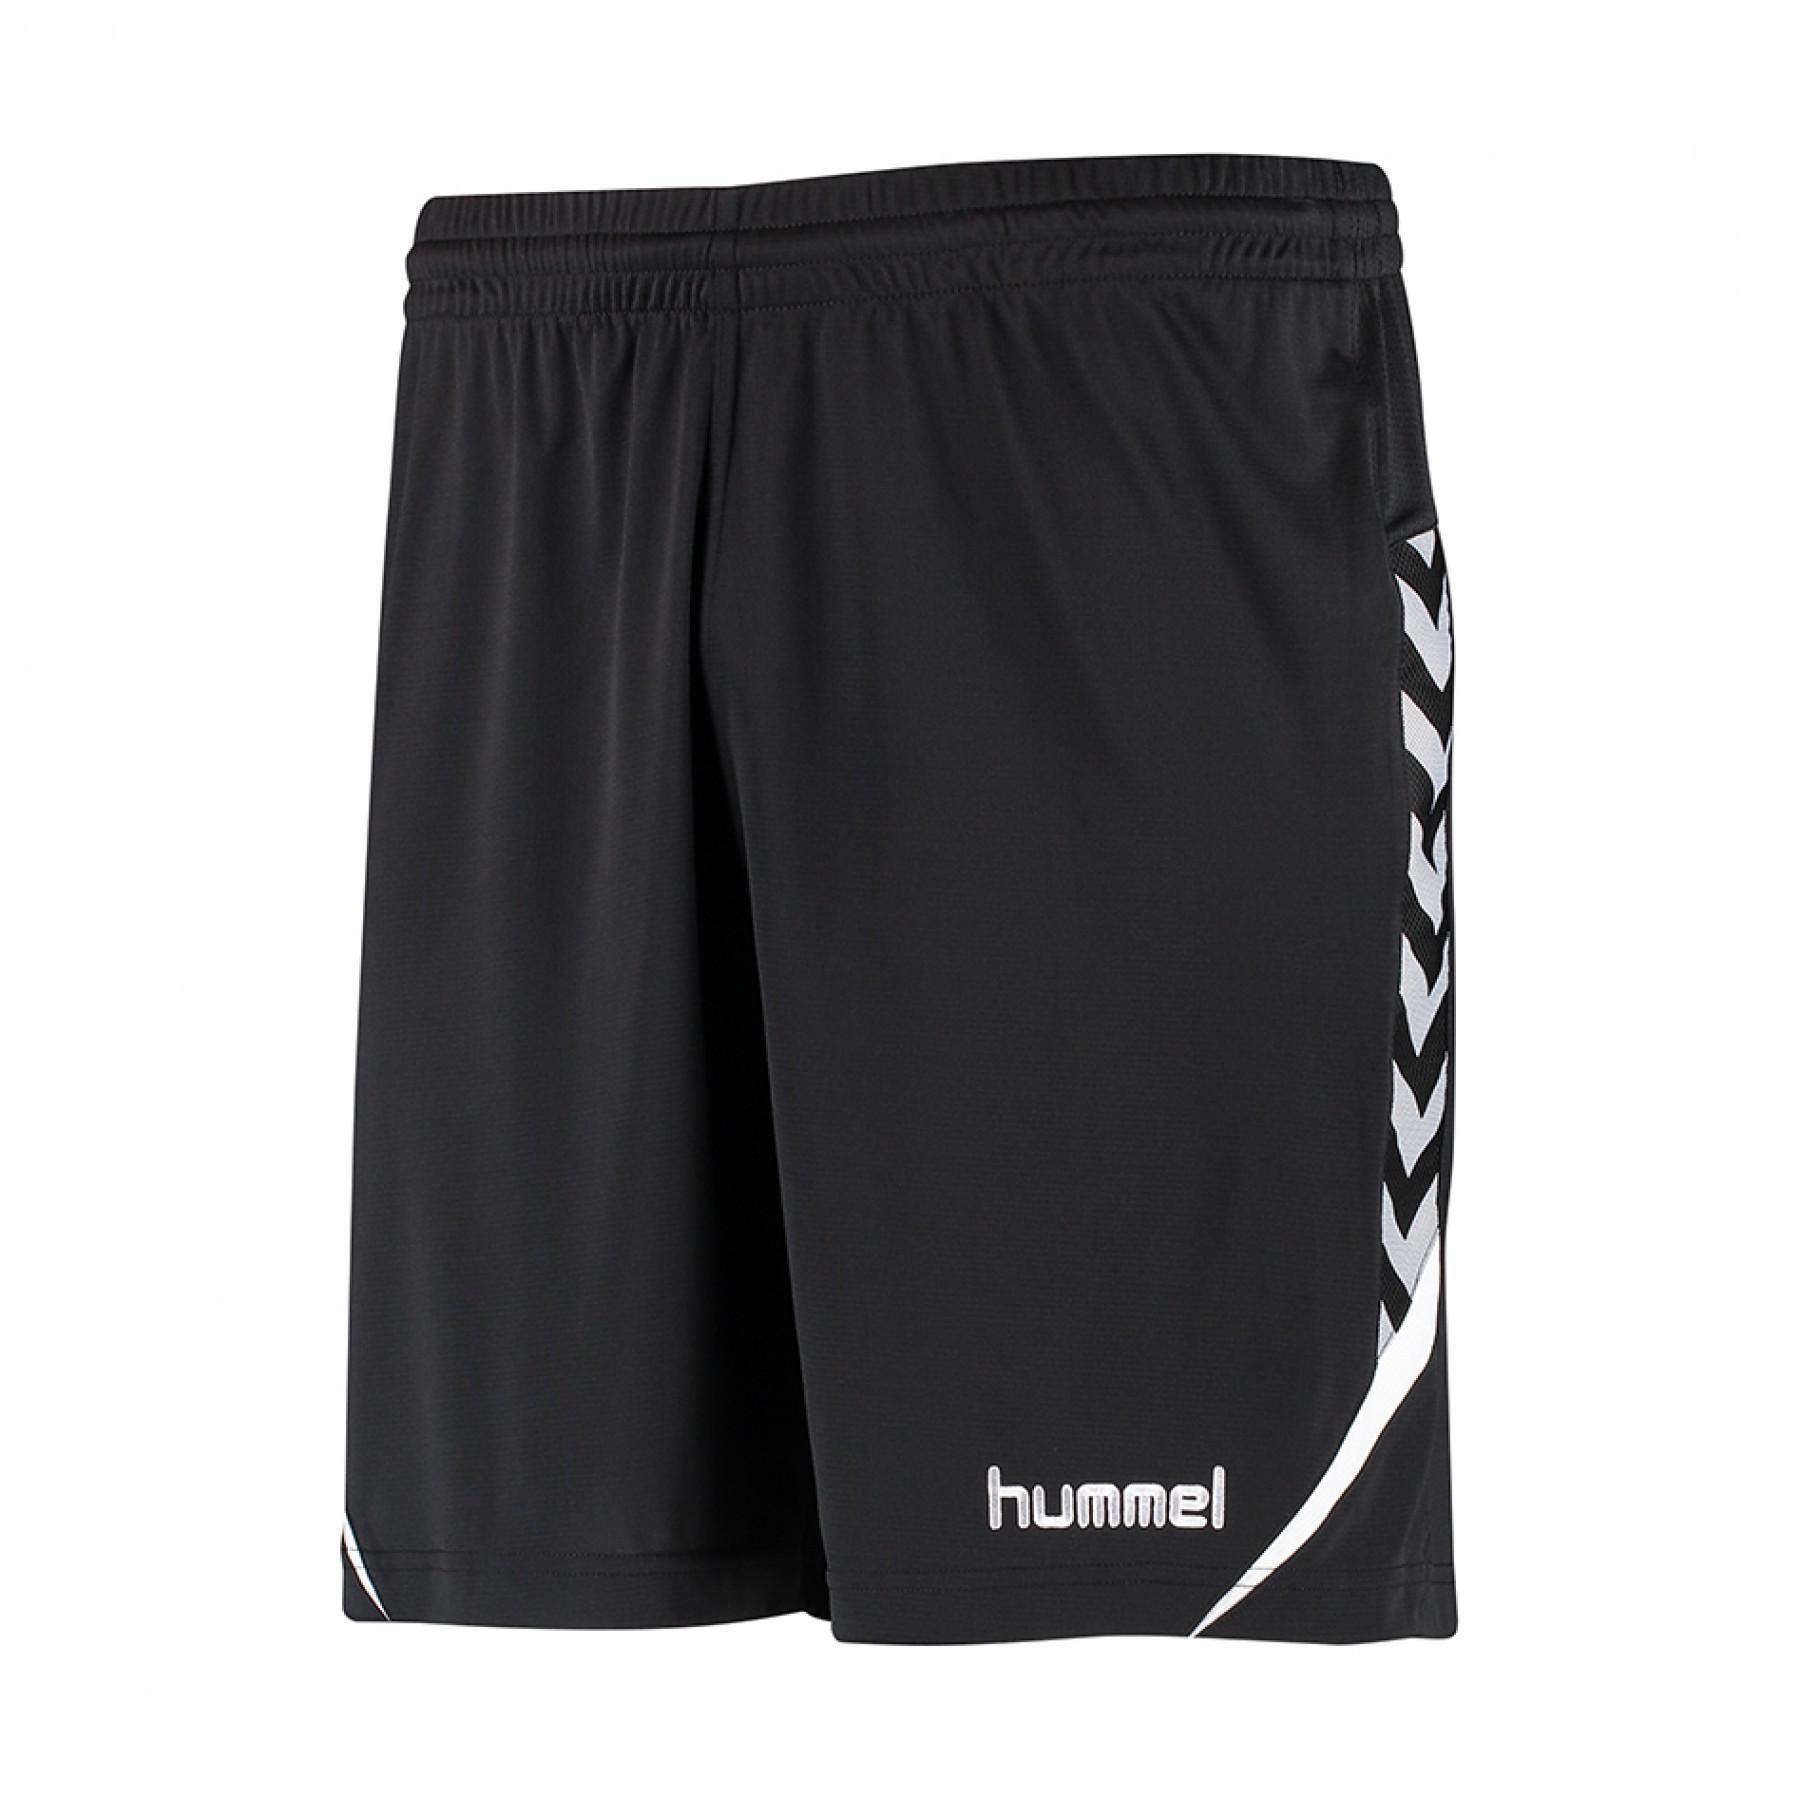 Okklusion Bygger Framework Short Hummel auth charge poly - Shorts - Textile - Handball wear